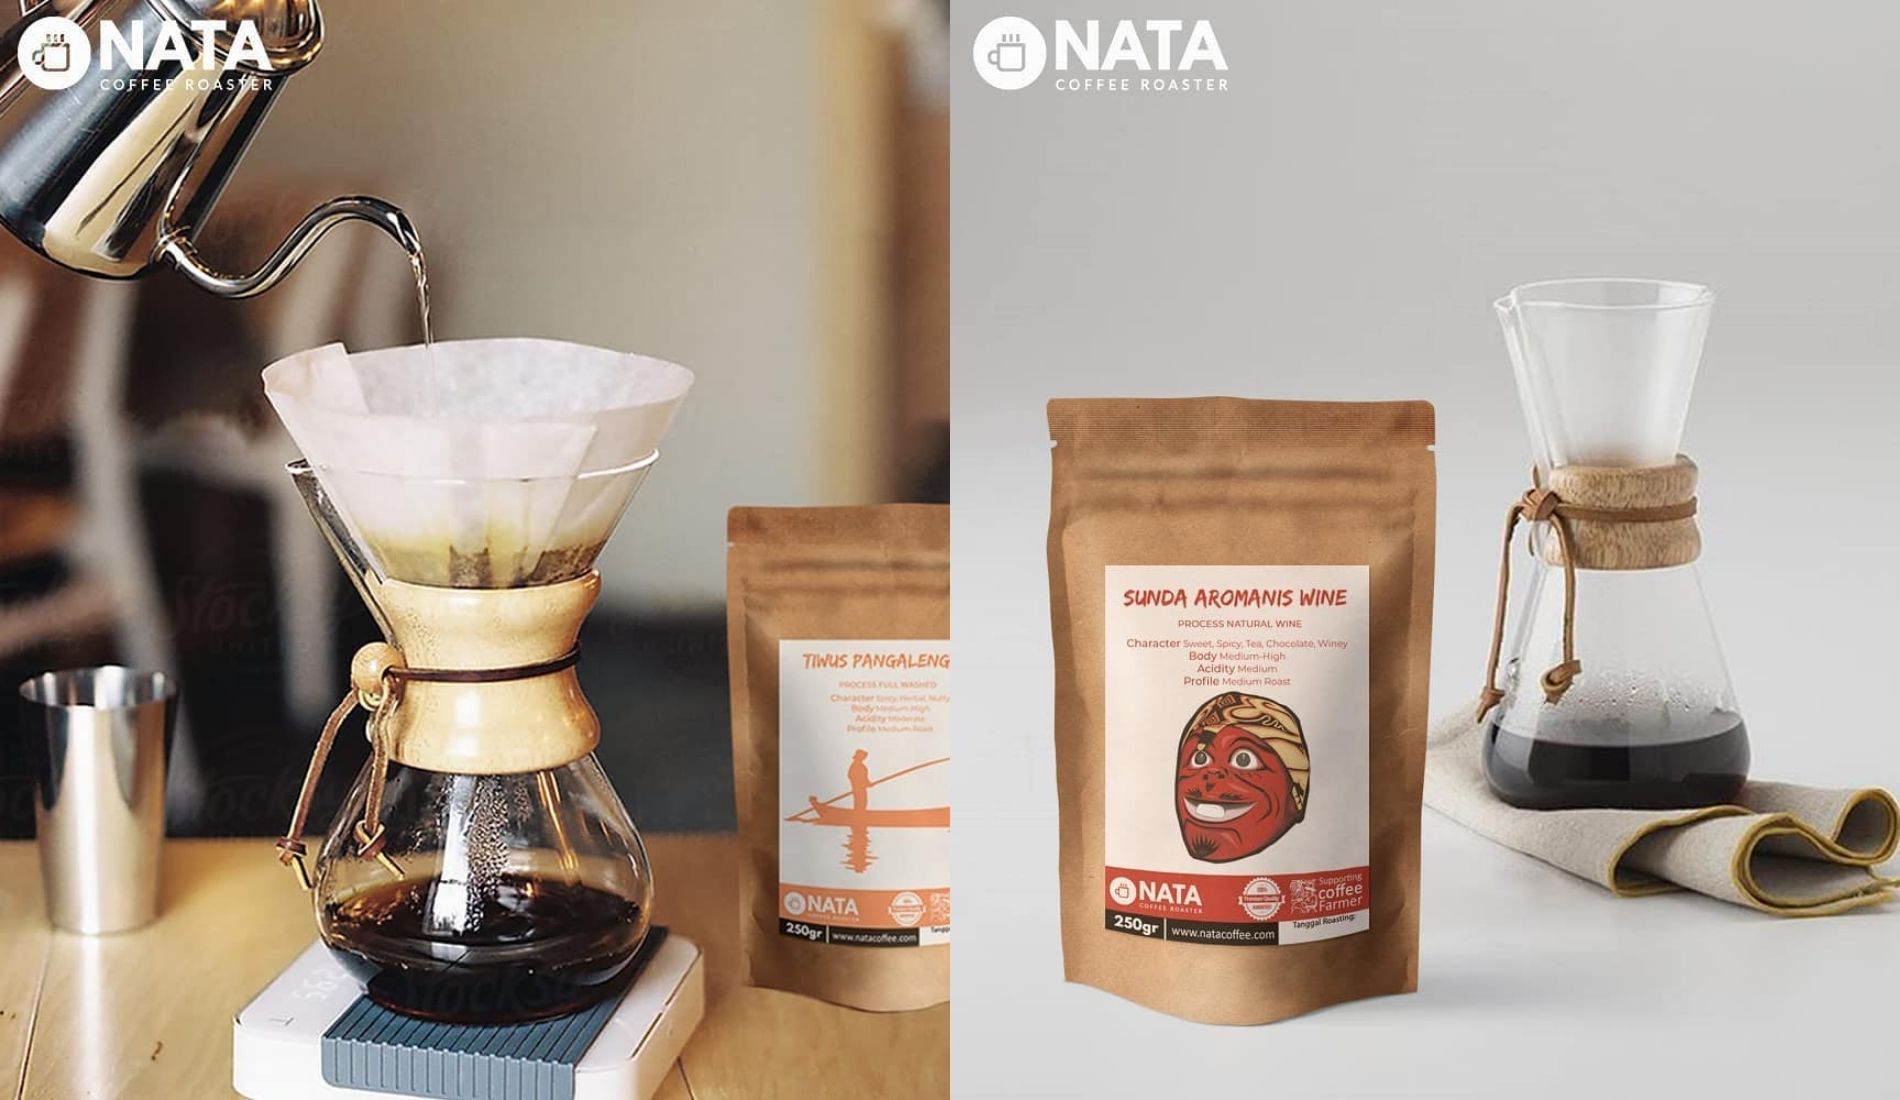 Contoh Foto Produk Roated Coffee Nata Coffee Illustration Bisnis Muda - Image: Instagram Nata Coffee